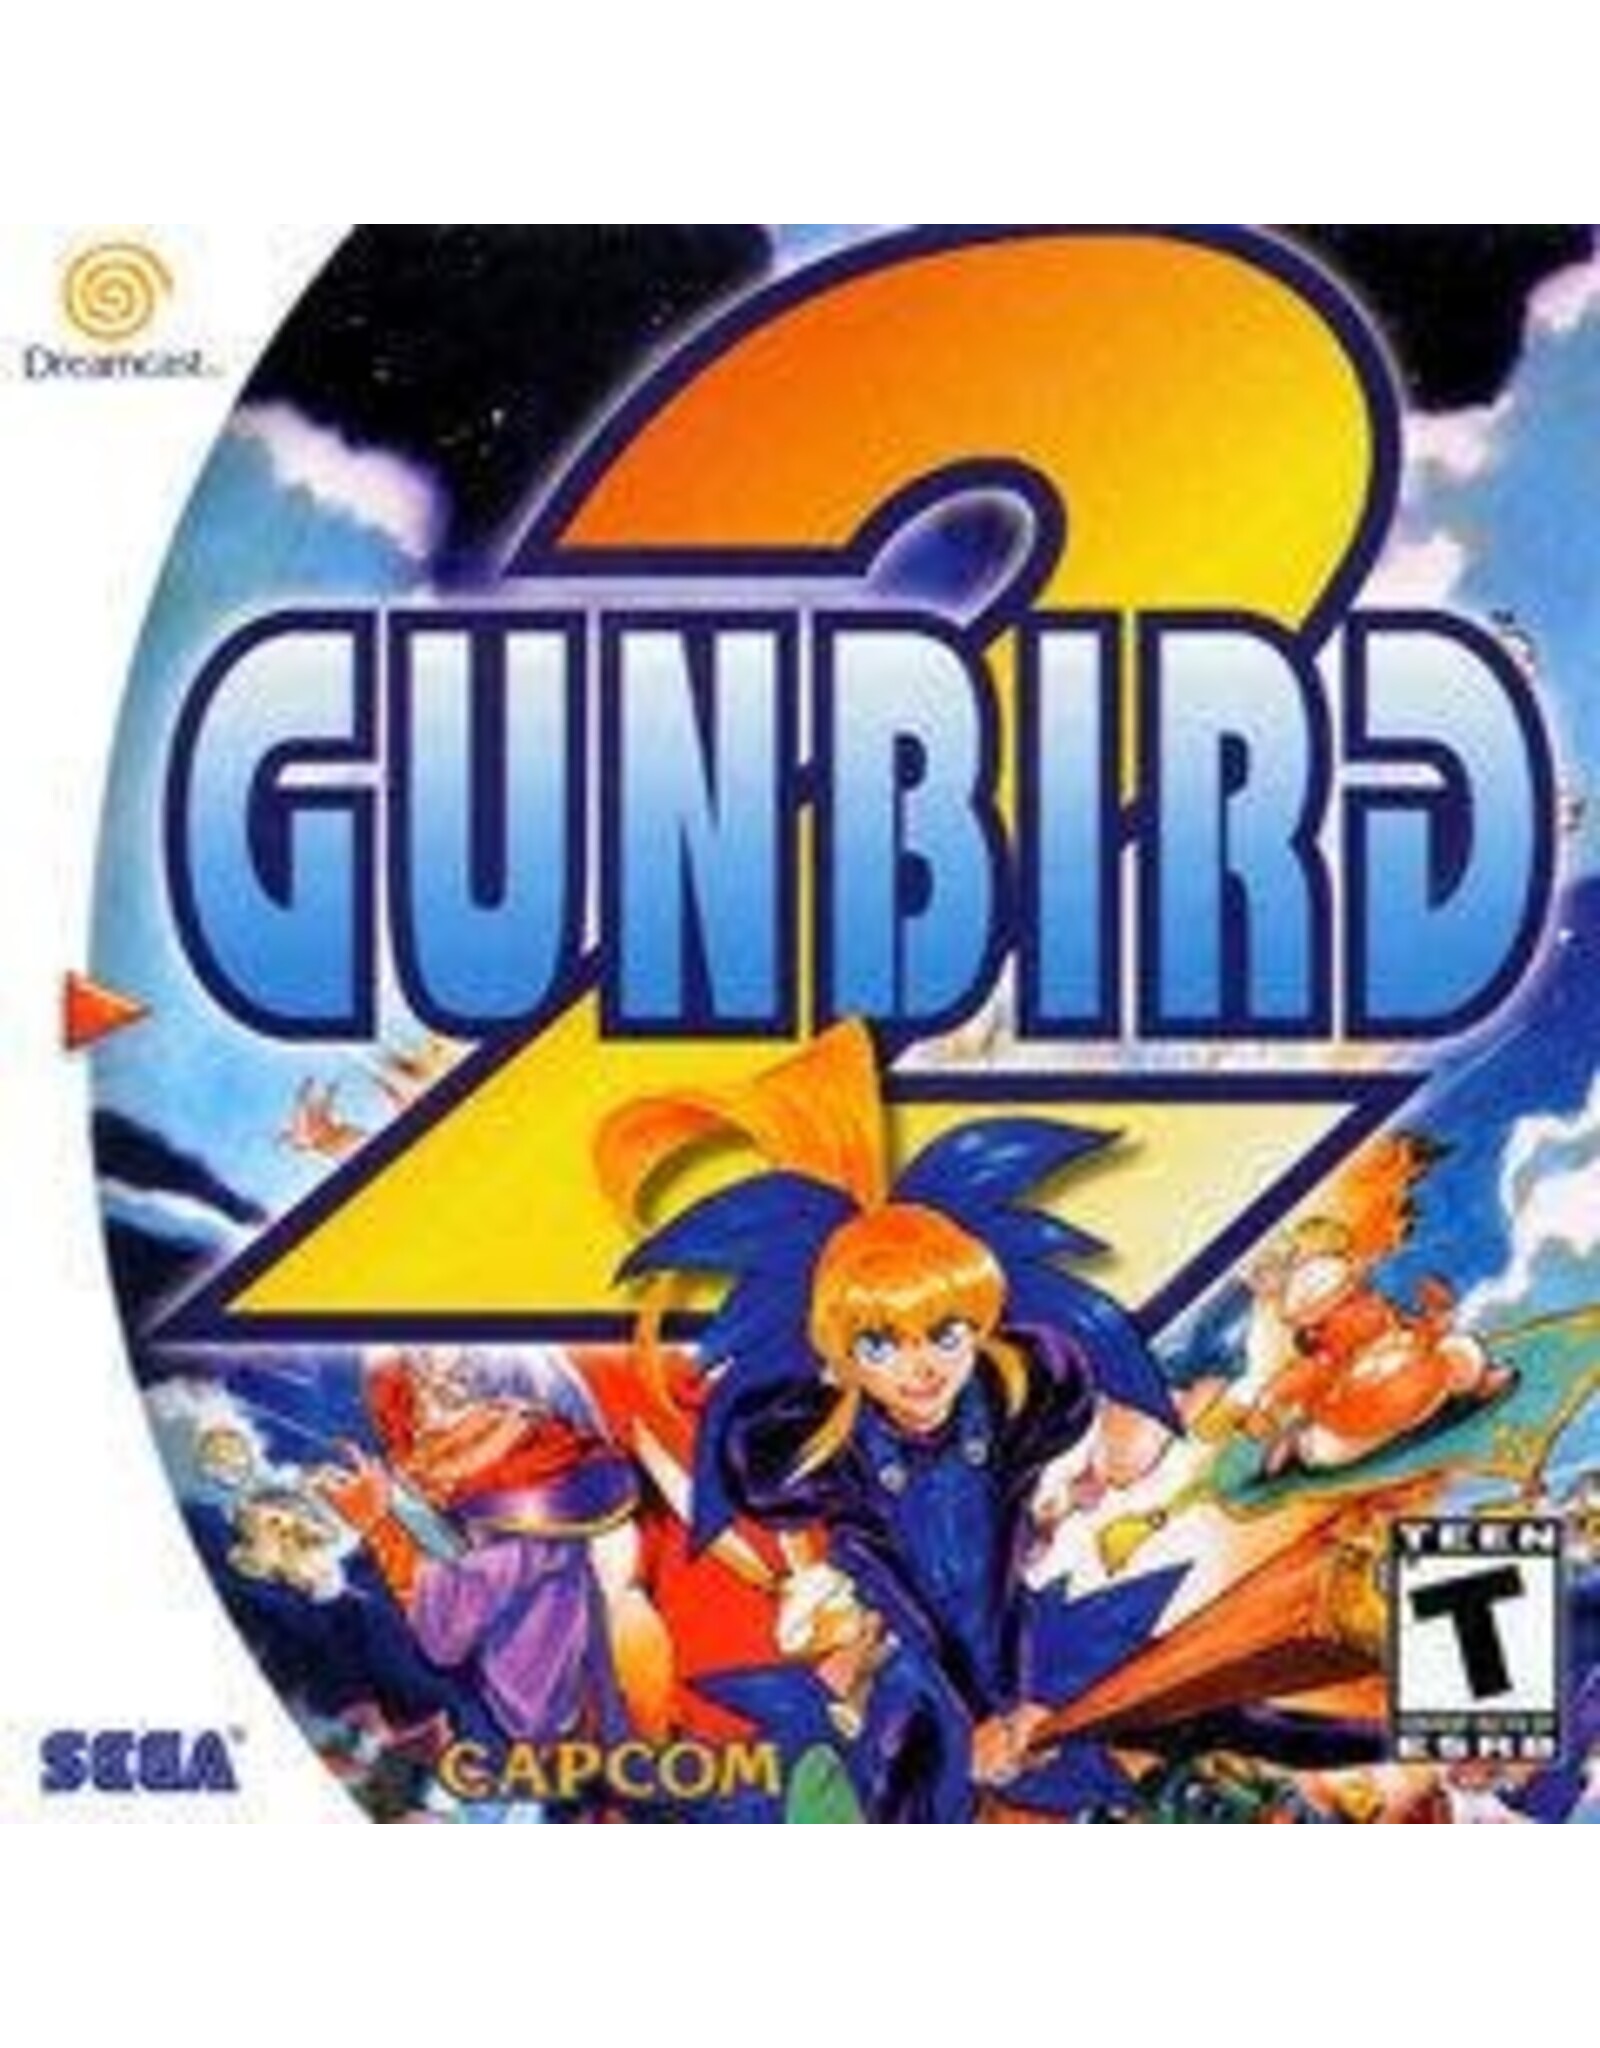 Sega Dreamcast Gunbird 2 (CiB)